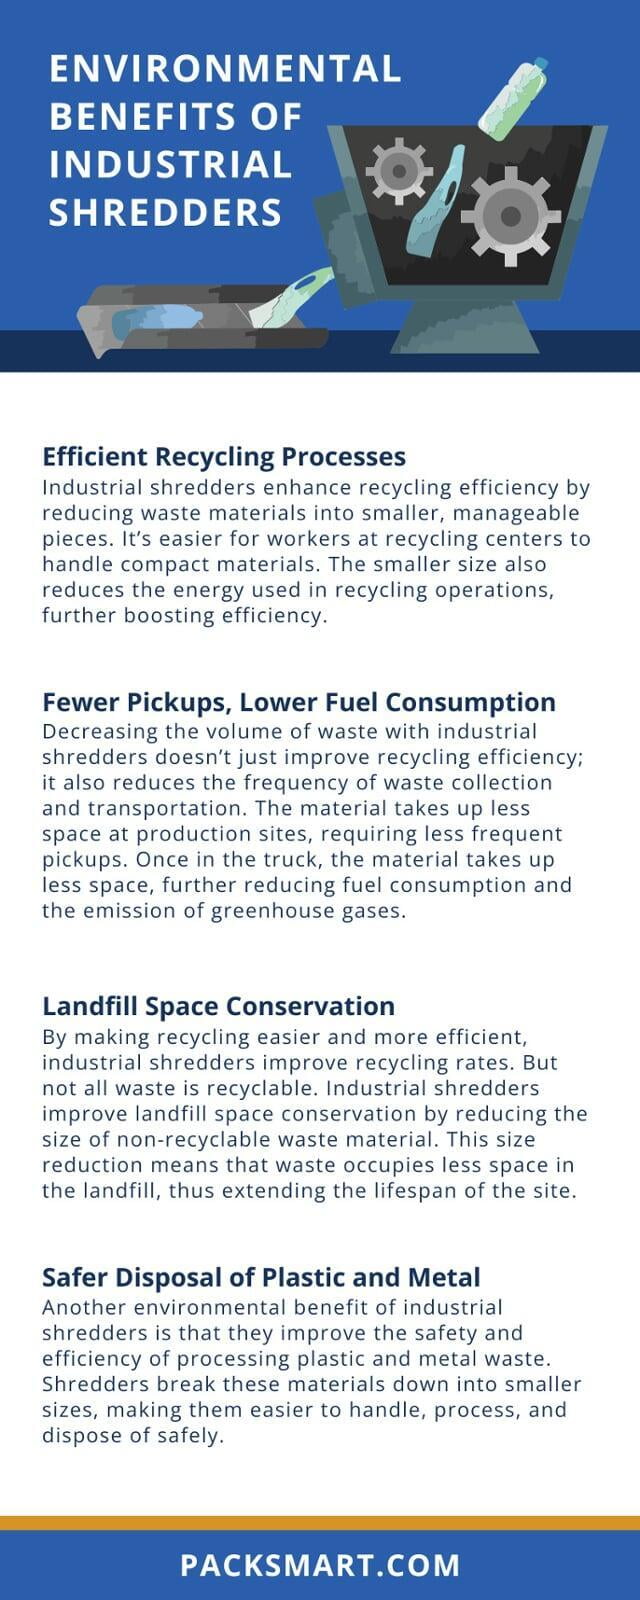 6 Environmental Benefits of Industrial Shredders